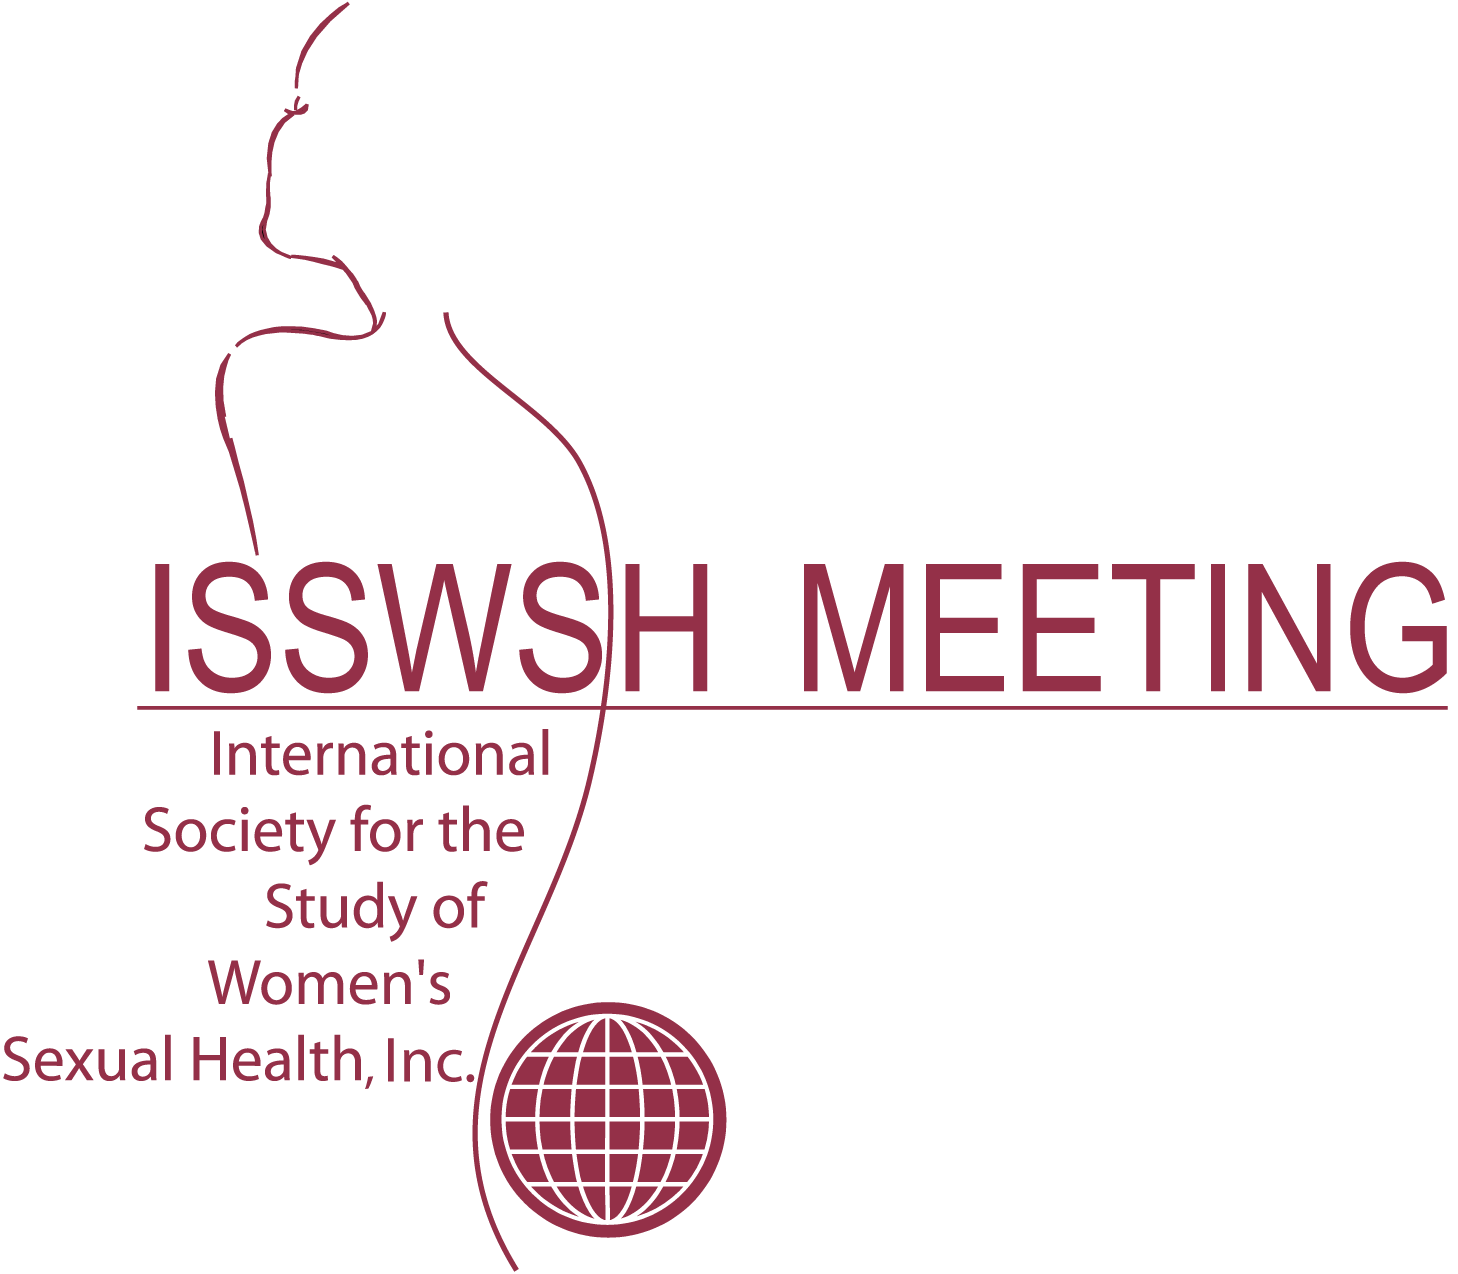 ISSWSH Meeting - Home1458 x 1274